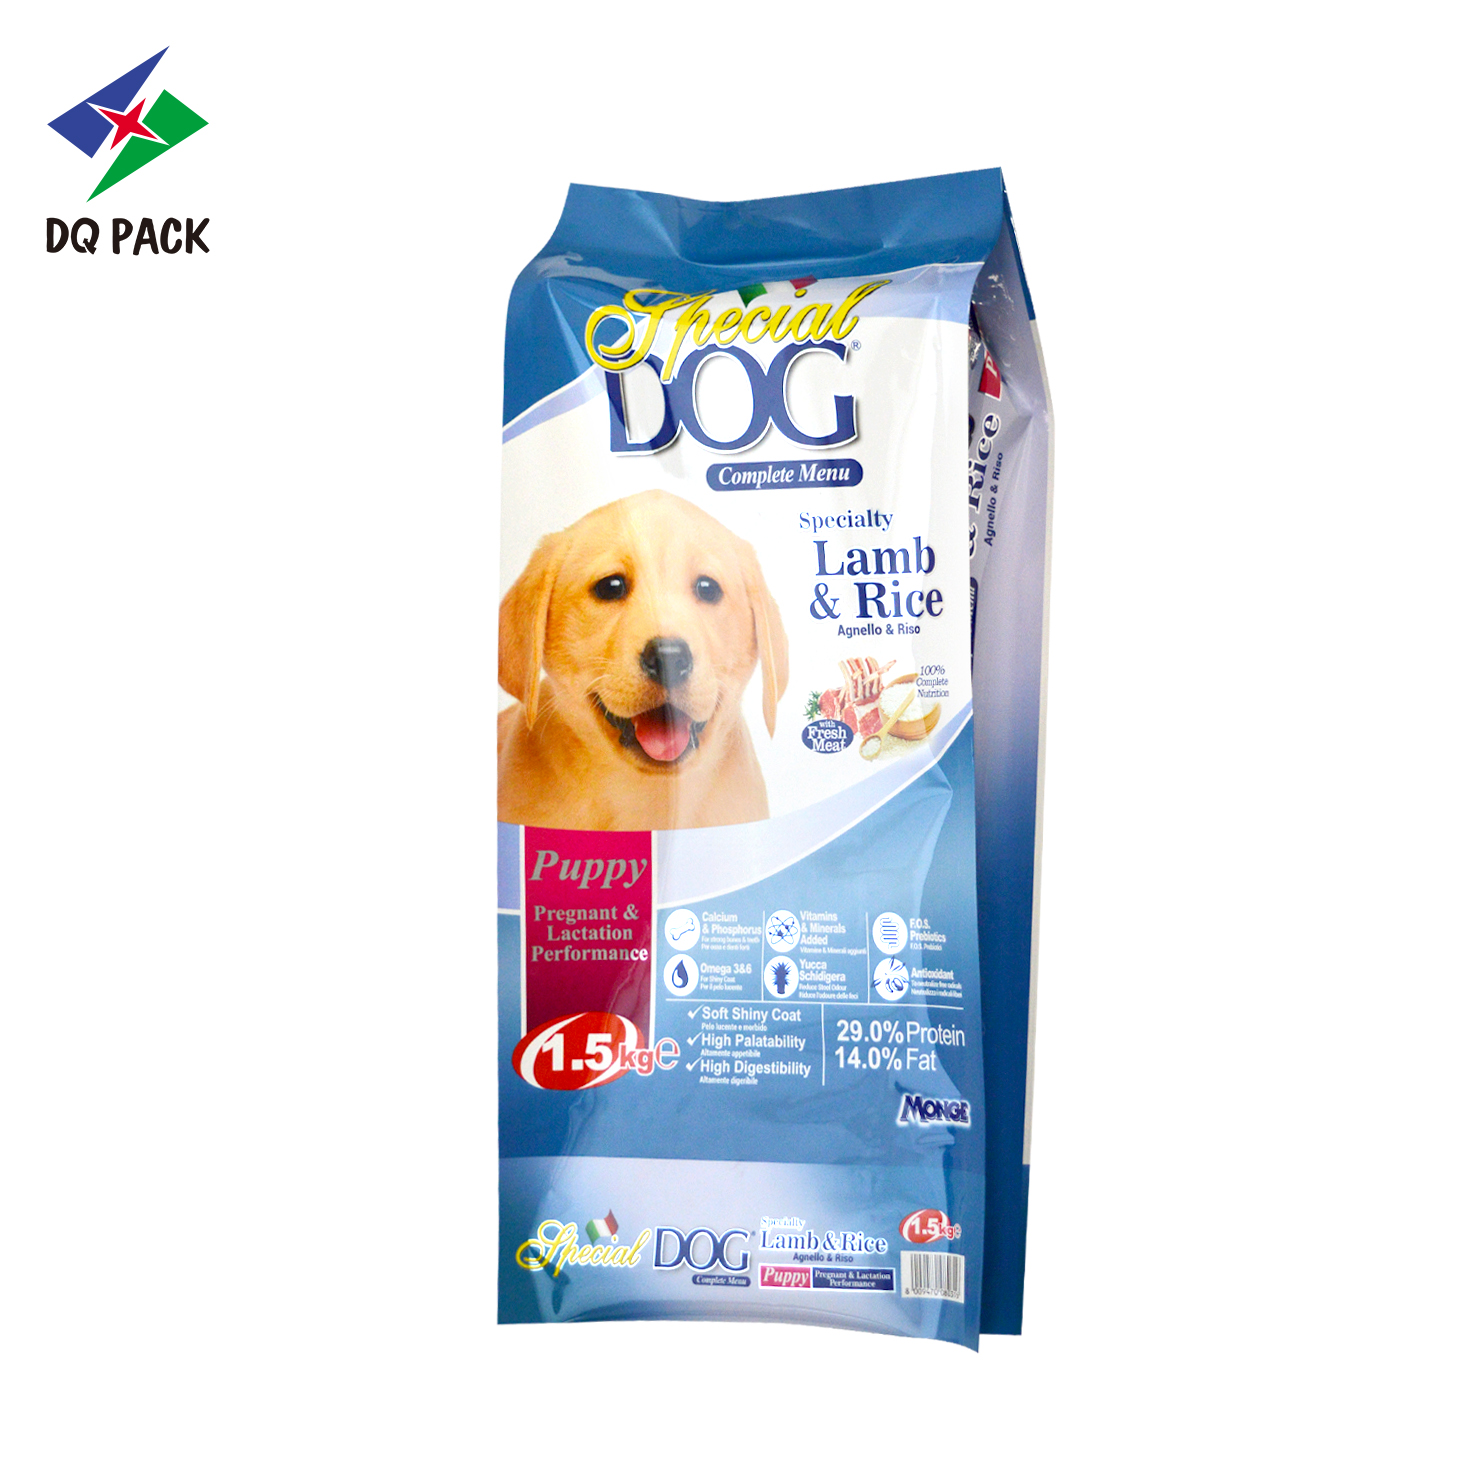 DQ PACK custom printed eco-friendly cat food printed packaging bag doypack pet food bag